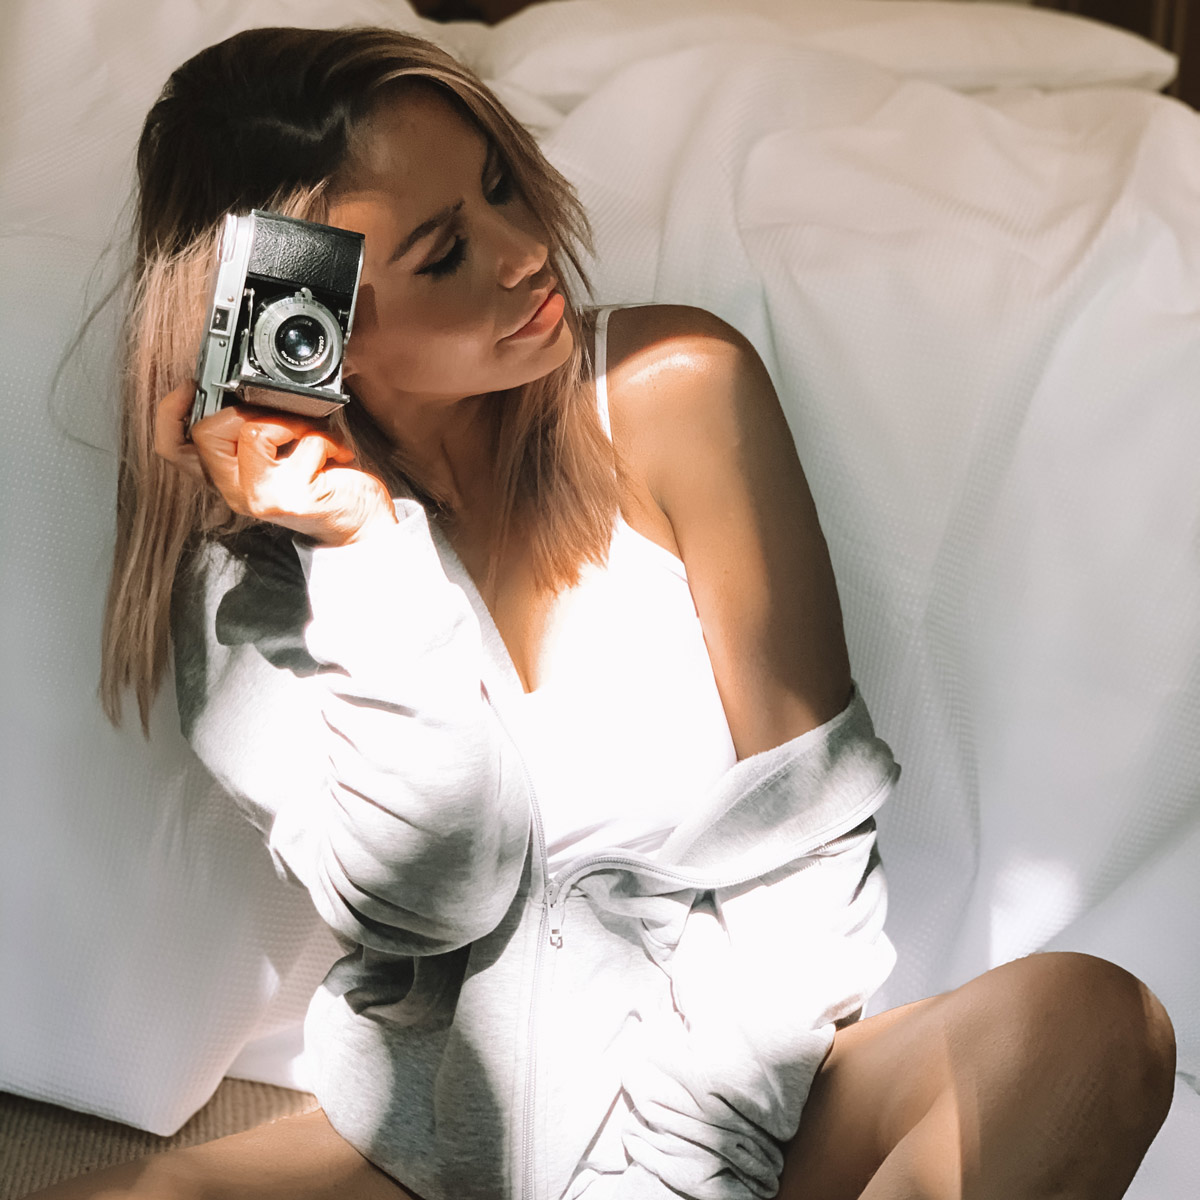 sofiadirado | Selfie ideas instagram, Selfies poses, Laying in bed pictures  instagram